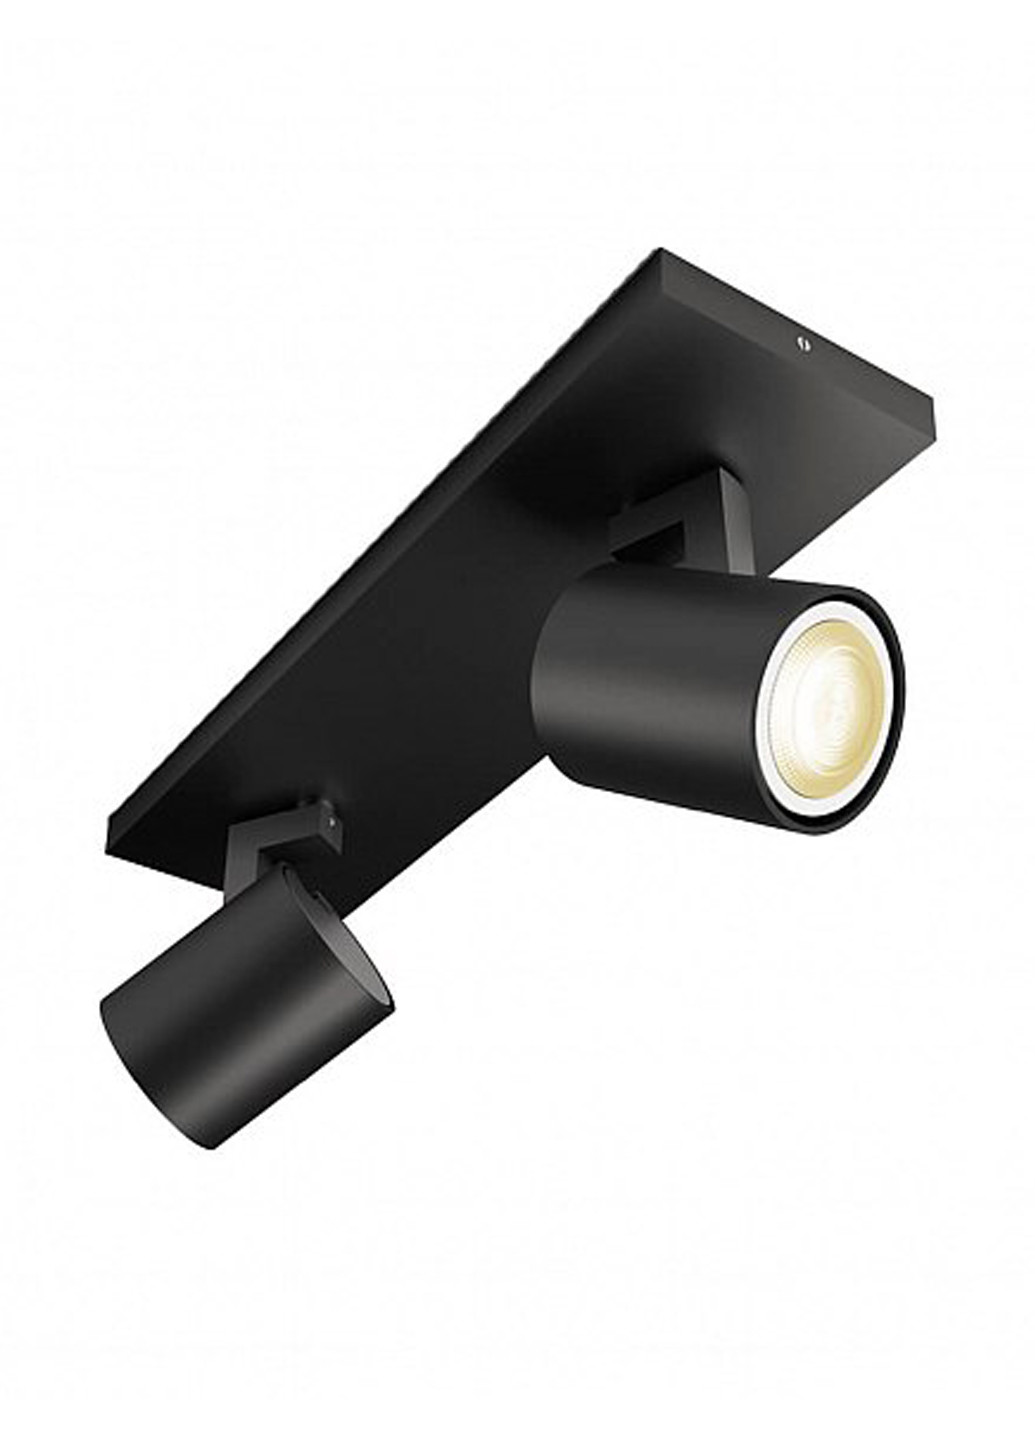 Смарт-светильник Runner Hue bar/tube black 2x5.5W (53092/30/P7) Philips смарт runner hue bar/tube black 2x5.5w (53092/30/p7) (142289740)